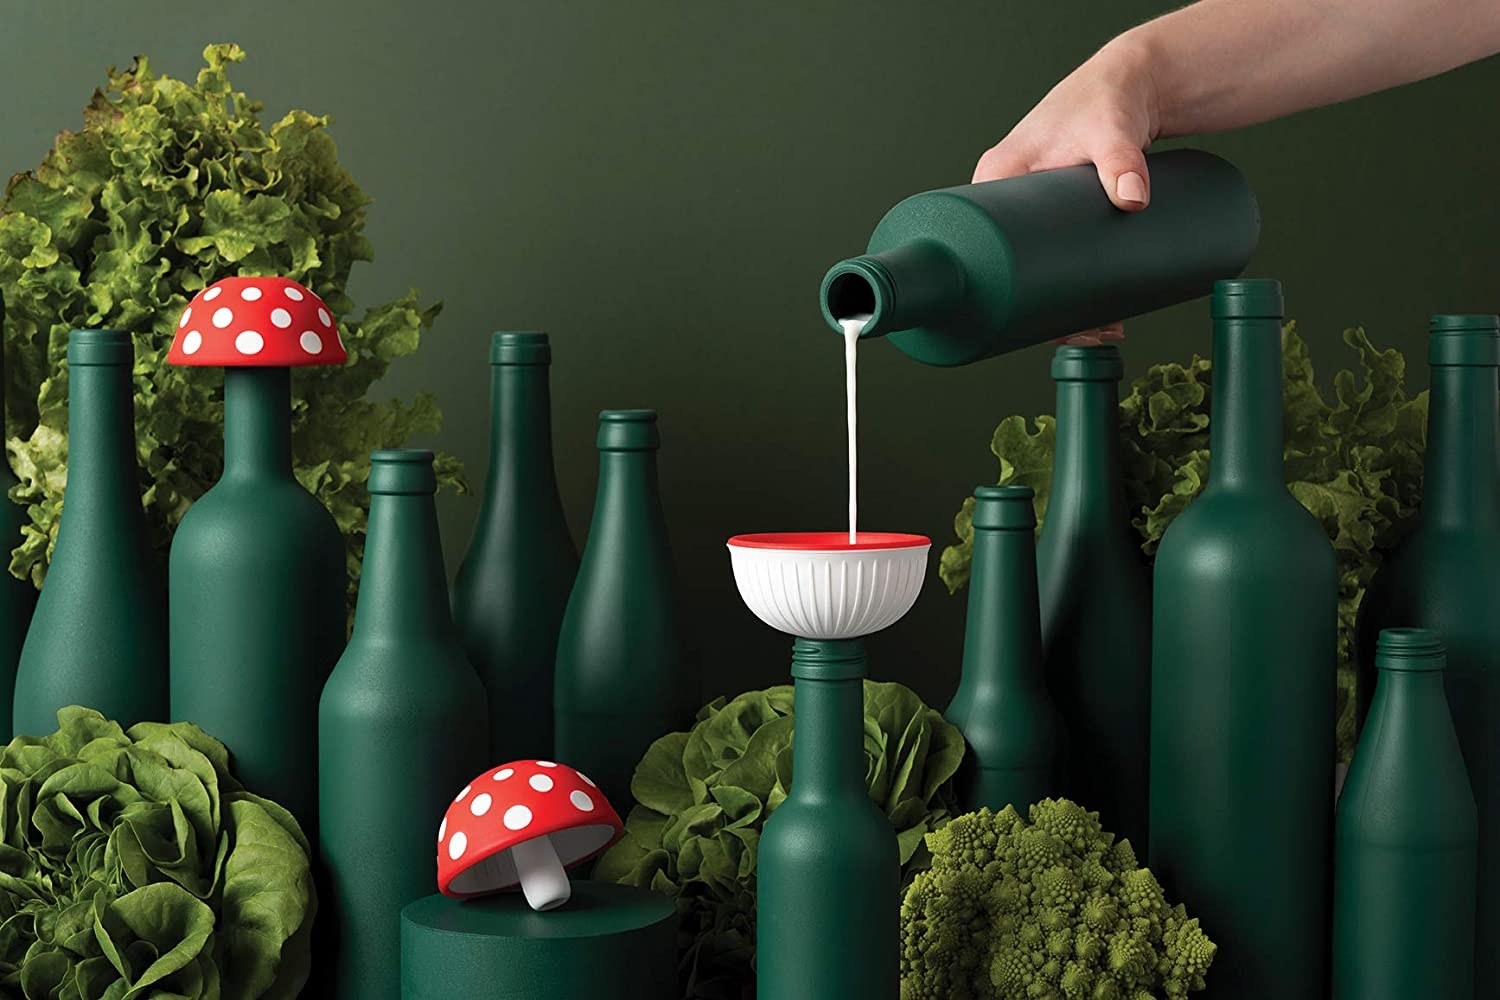 Liquid gets poured into mushroom-shaped funnel